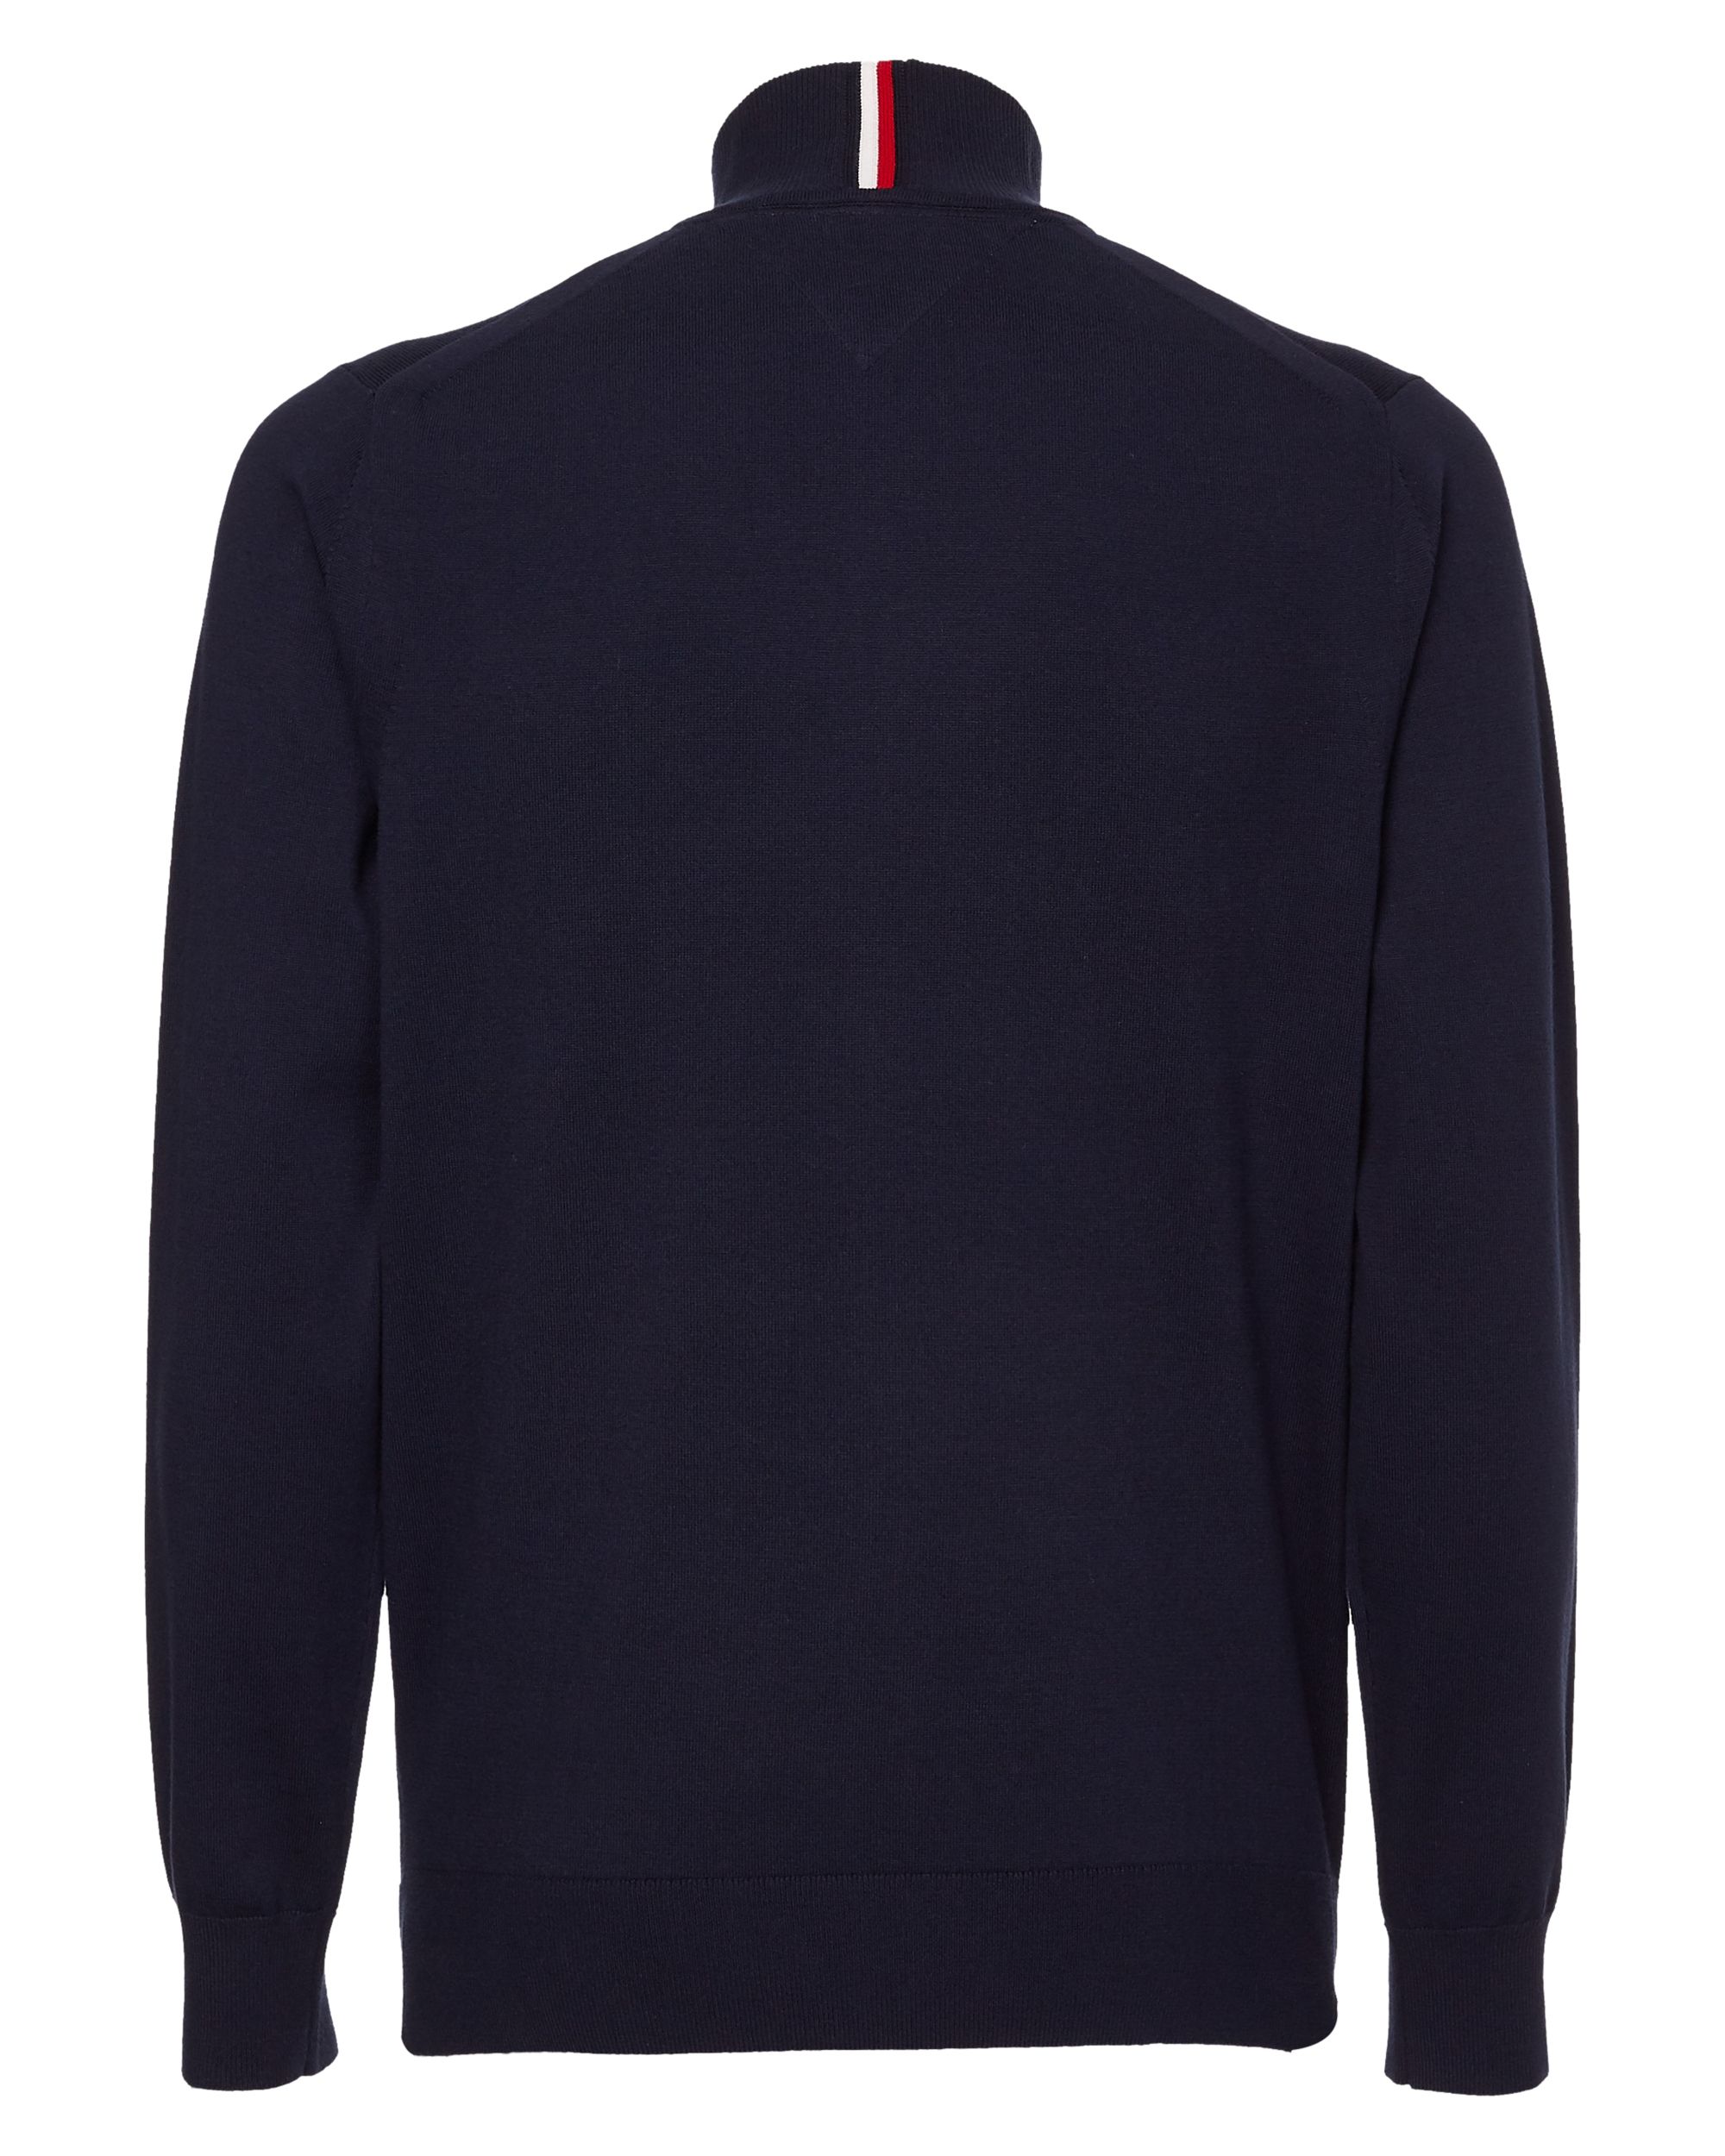 Tommy Hilfiger Menswear Vest Donker blauw 086338-001-L